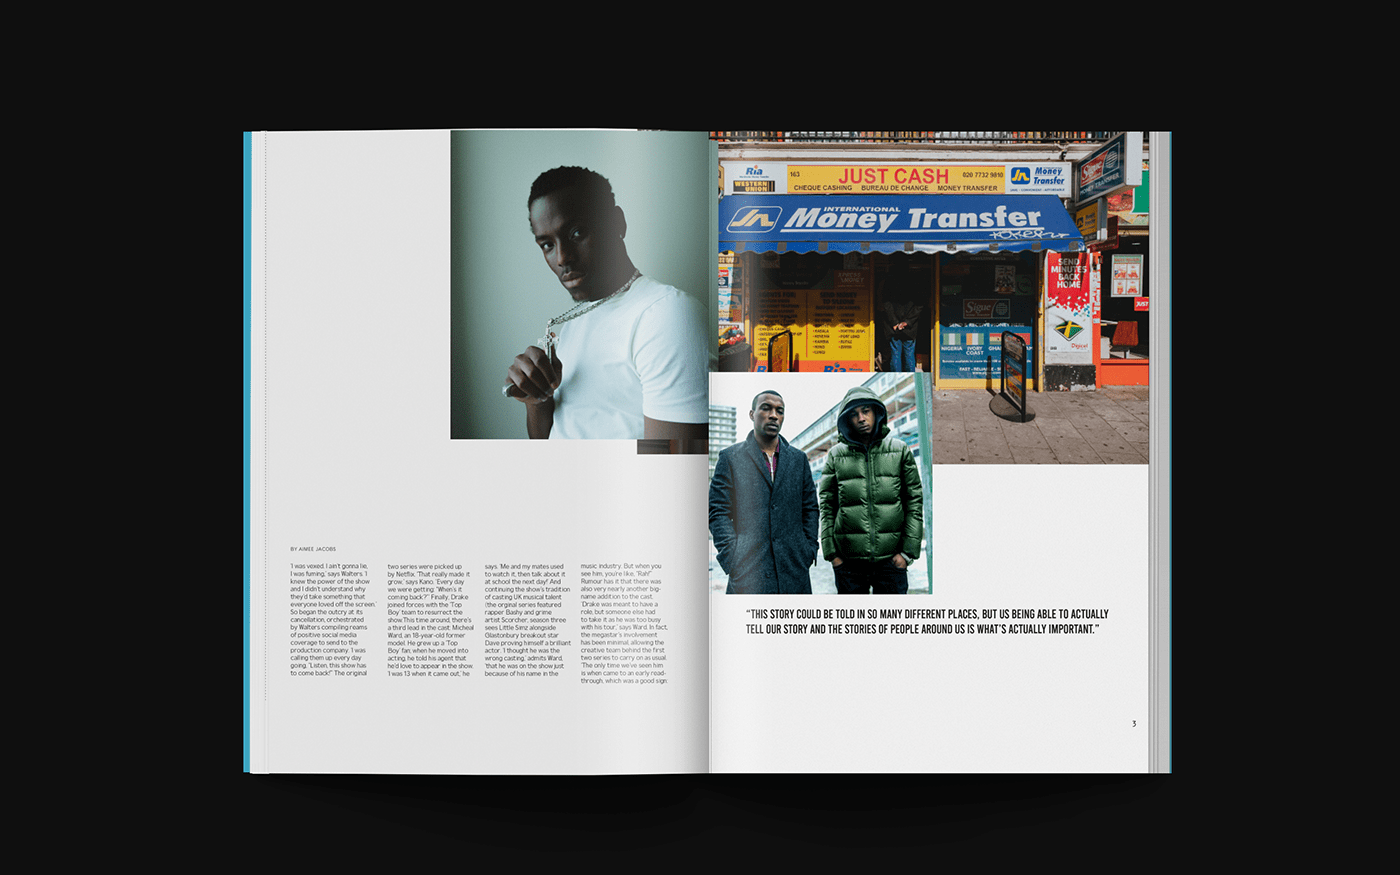 tory lanez topboy Urban London editorial hip hop typography   Street kano magazine